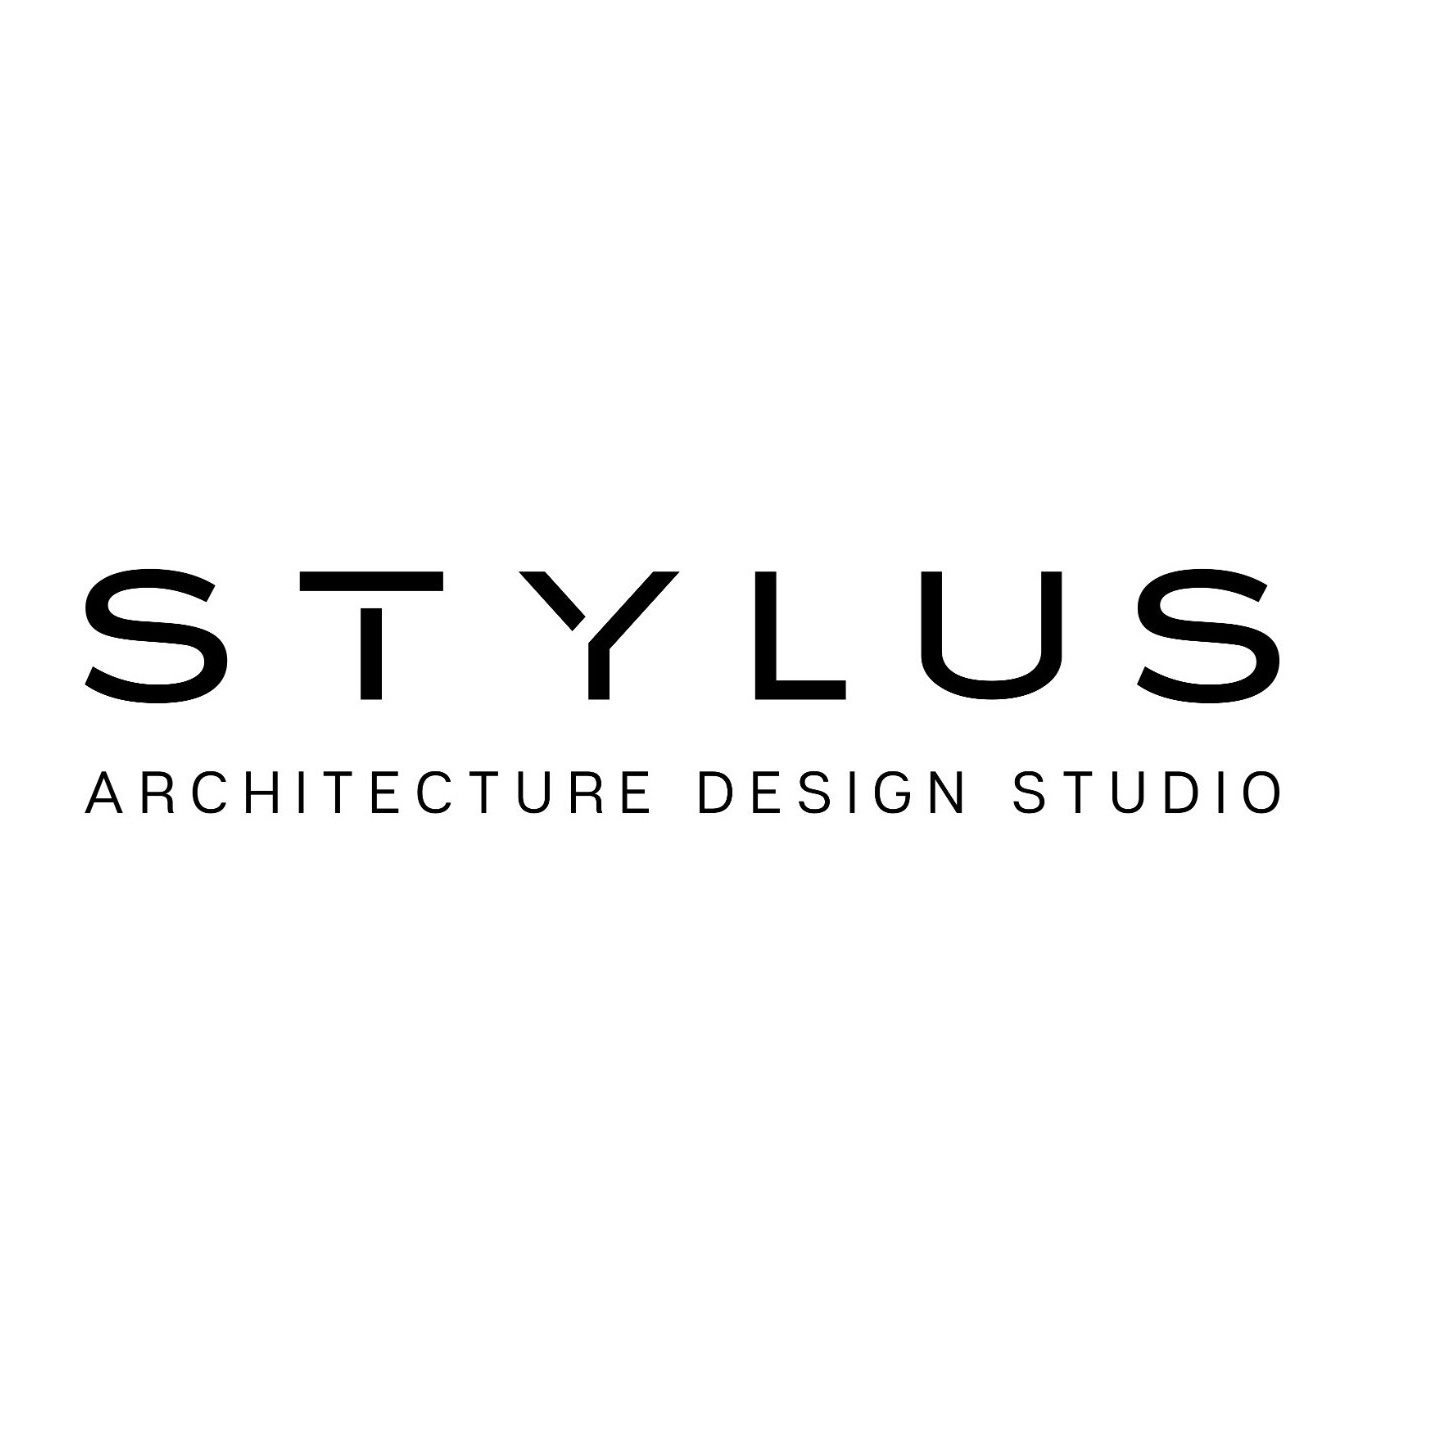 Stylus Architecture Design Studio